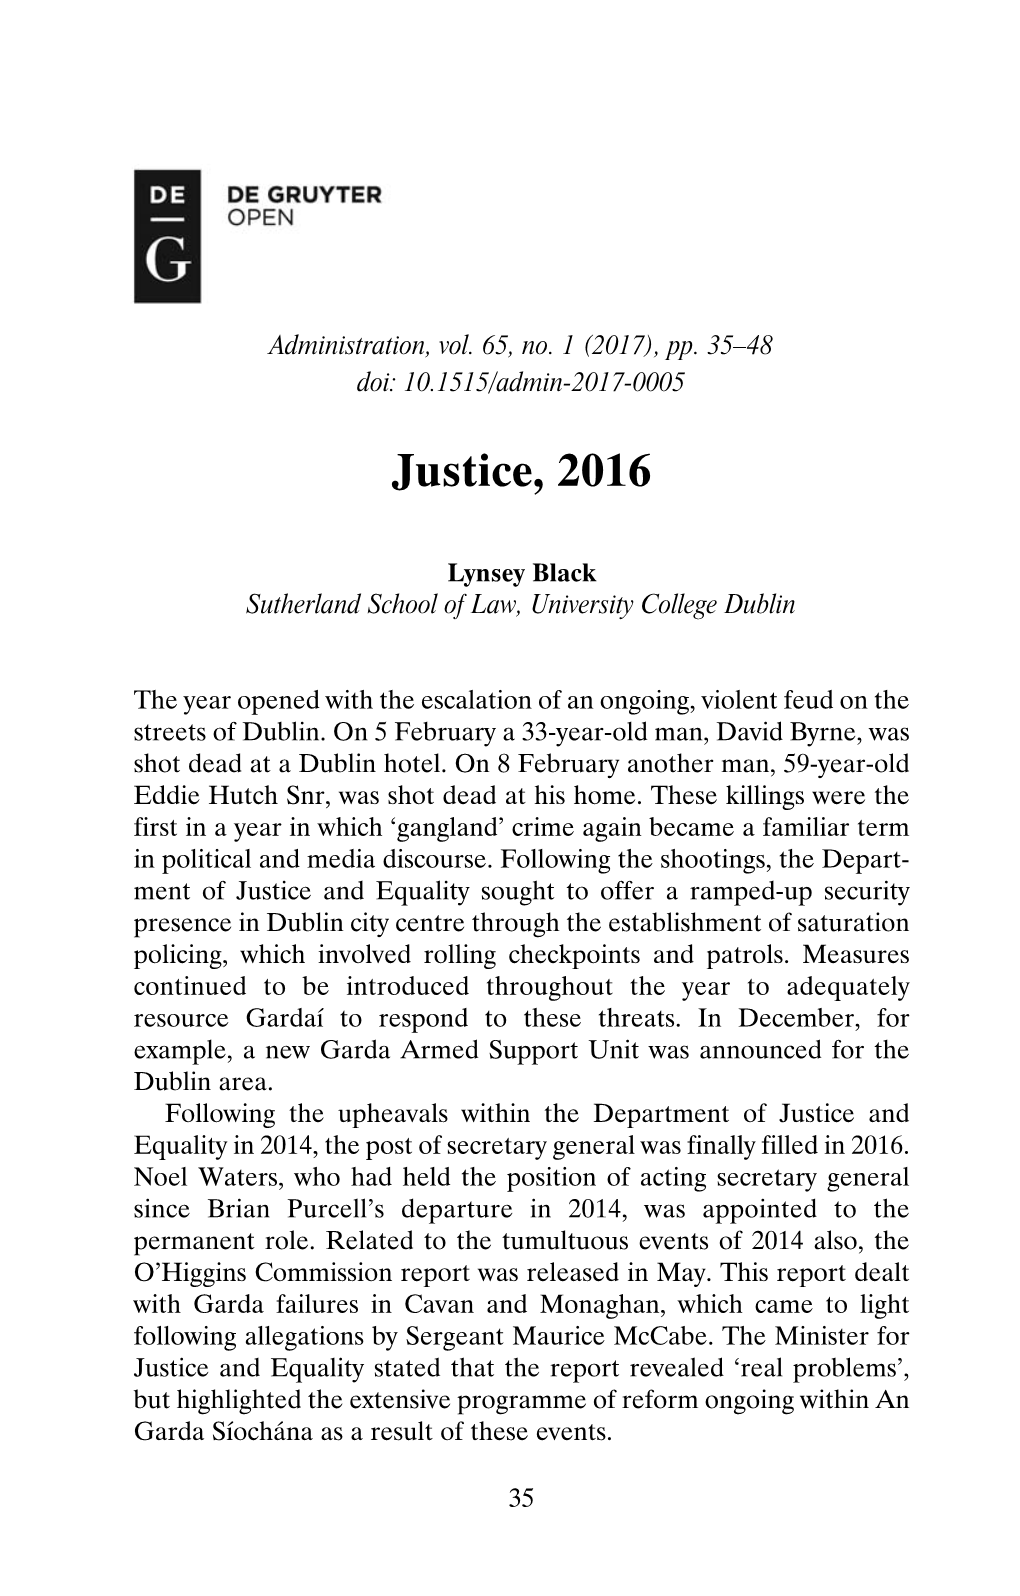 Justice, 2016